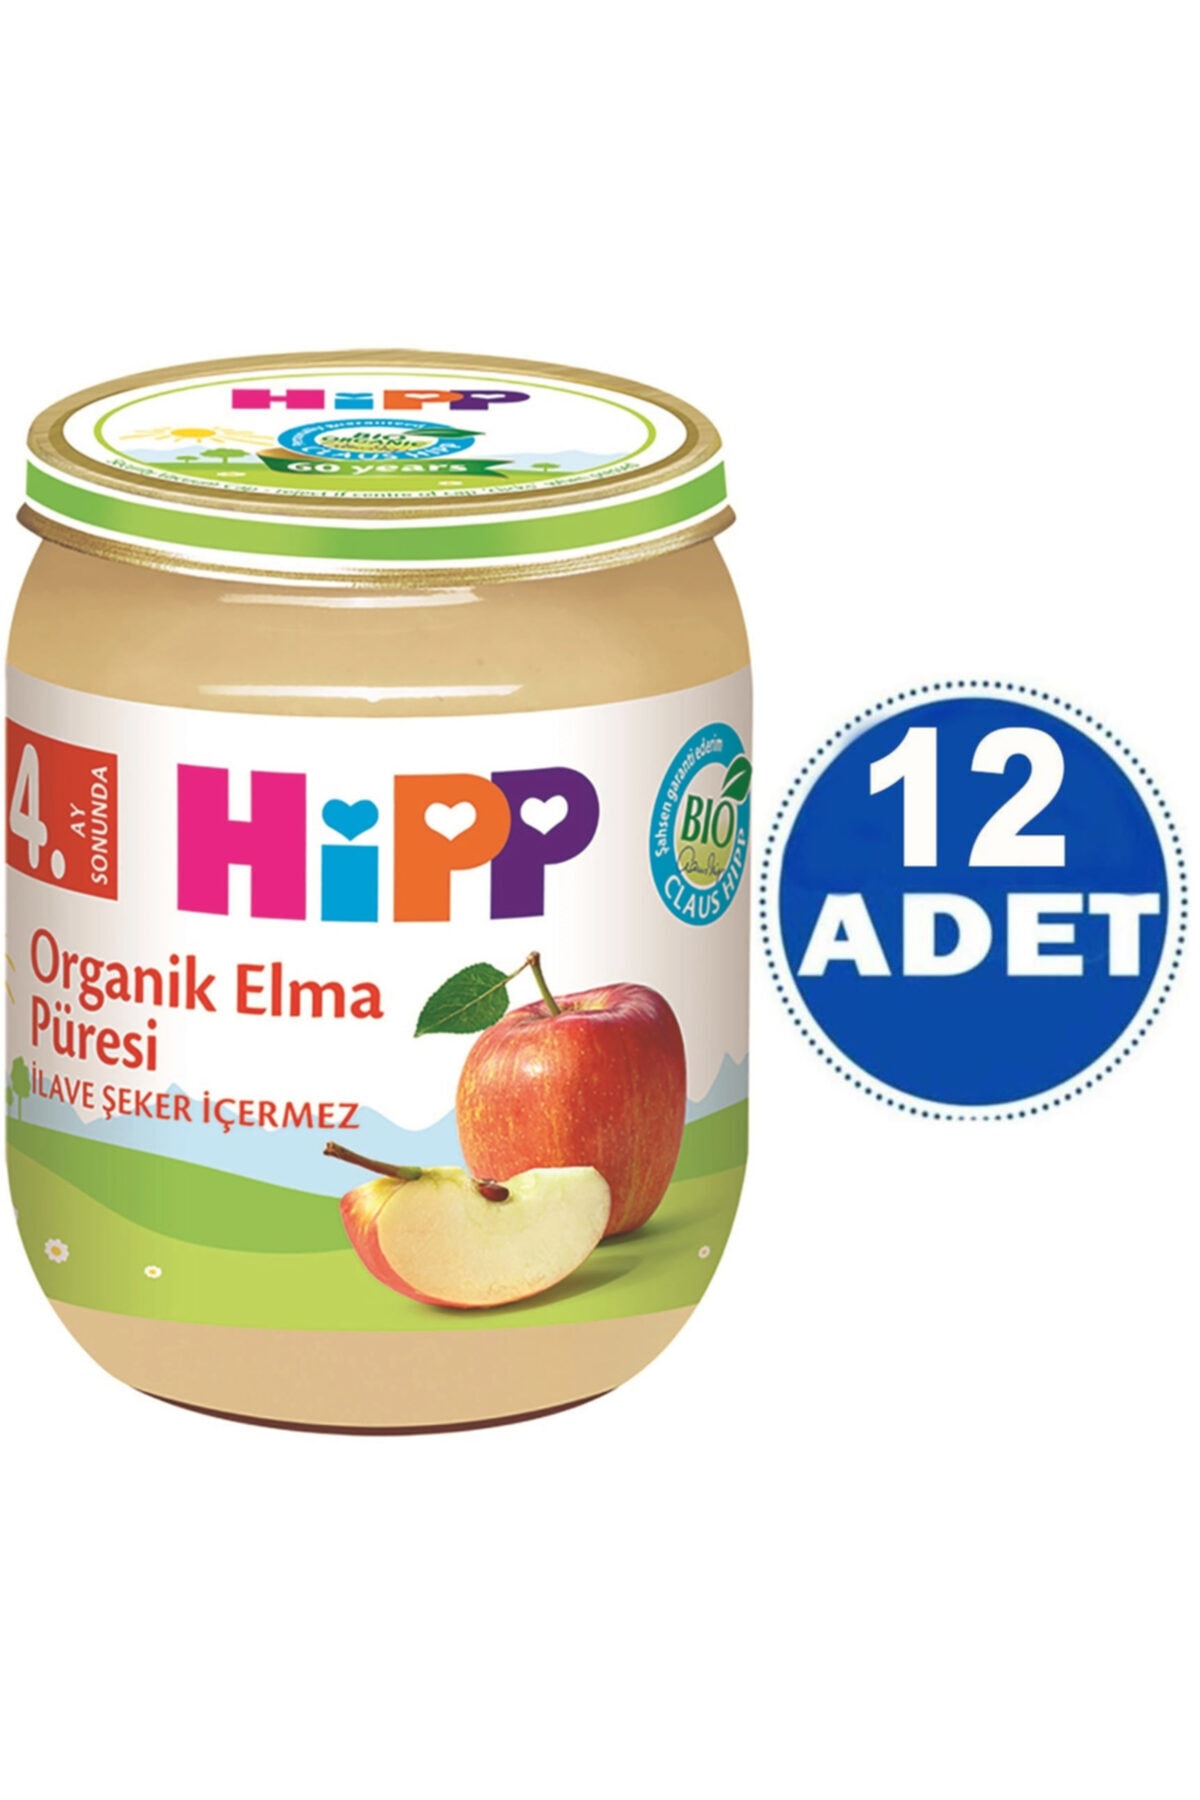 Hipp Kavanoz Maması Organik Elma Püresi 125 Gr 12'Li